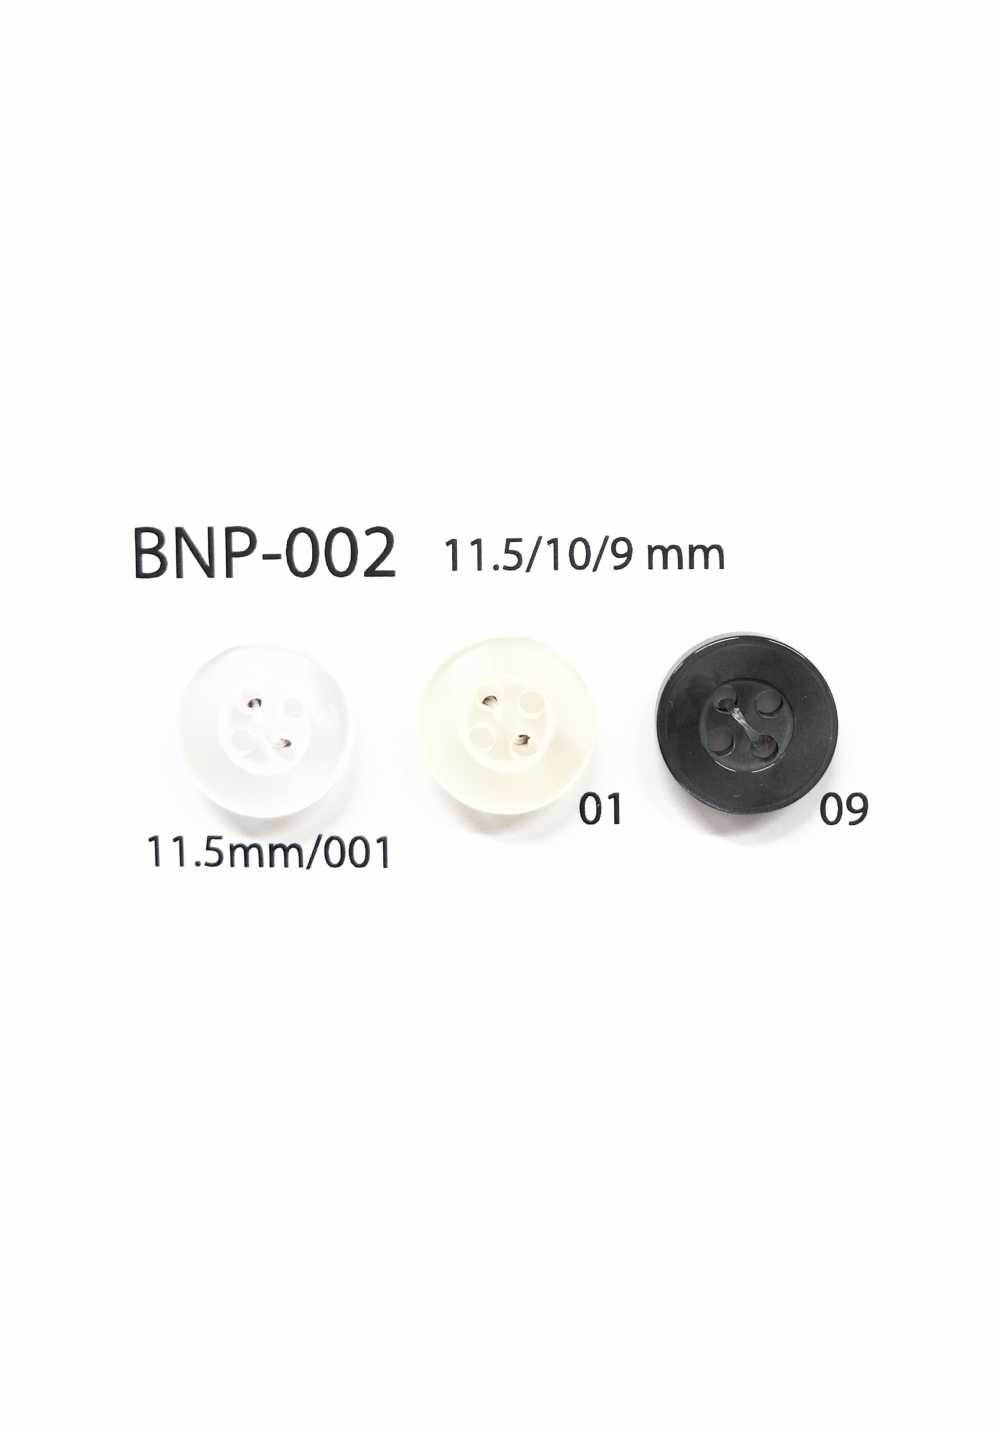 BNP-002 Biopolyester 4-hole Button IRIS